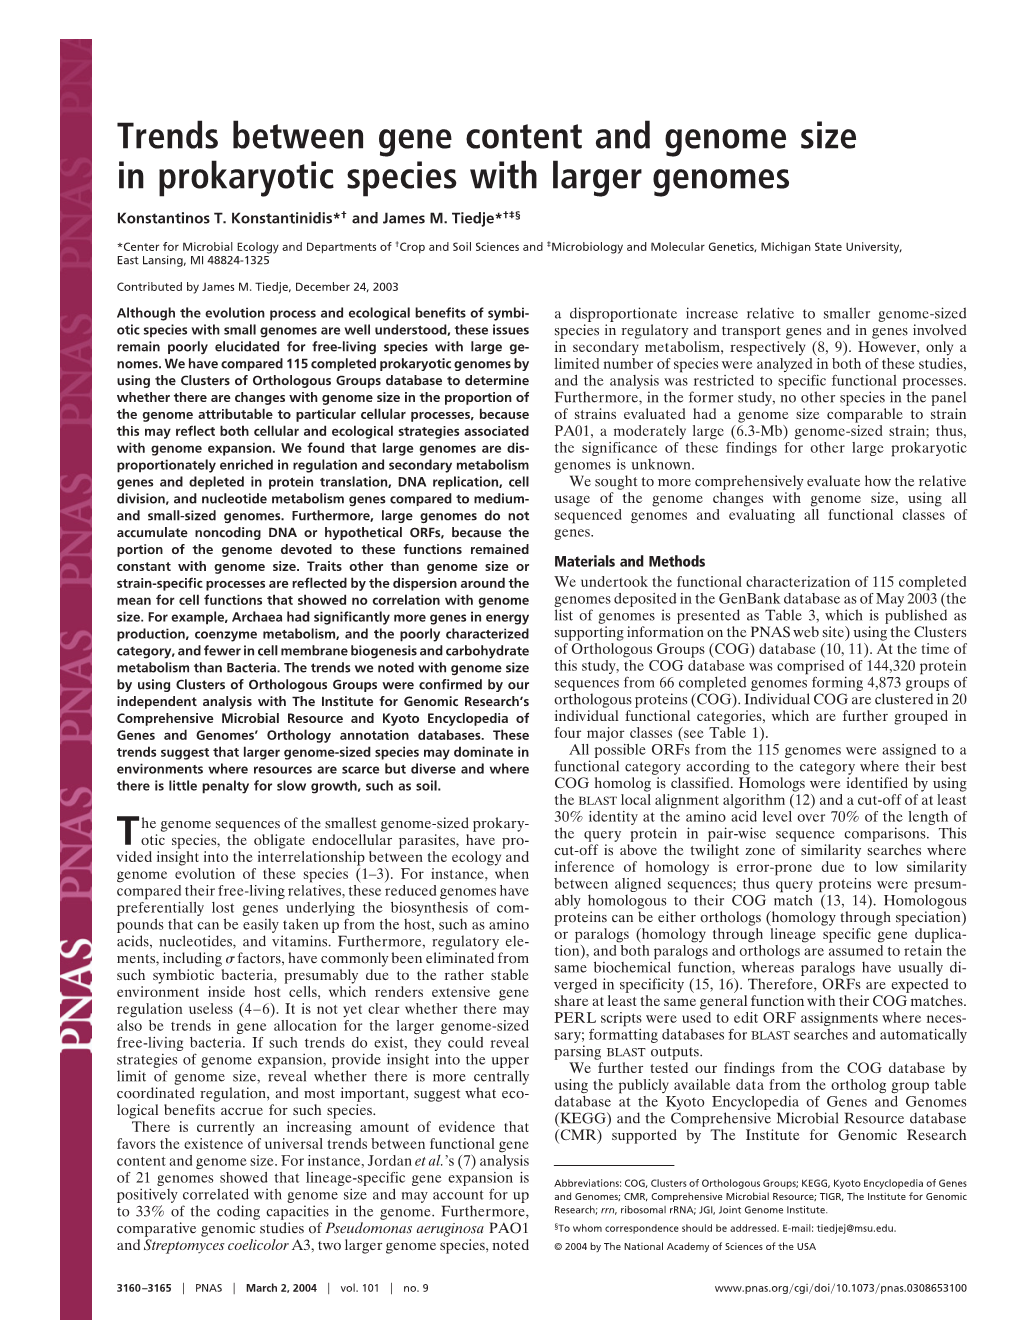 Trends Between Gene Content and Genome Size in Prokaryotic Species with Larger Genomes Konstantinos T